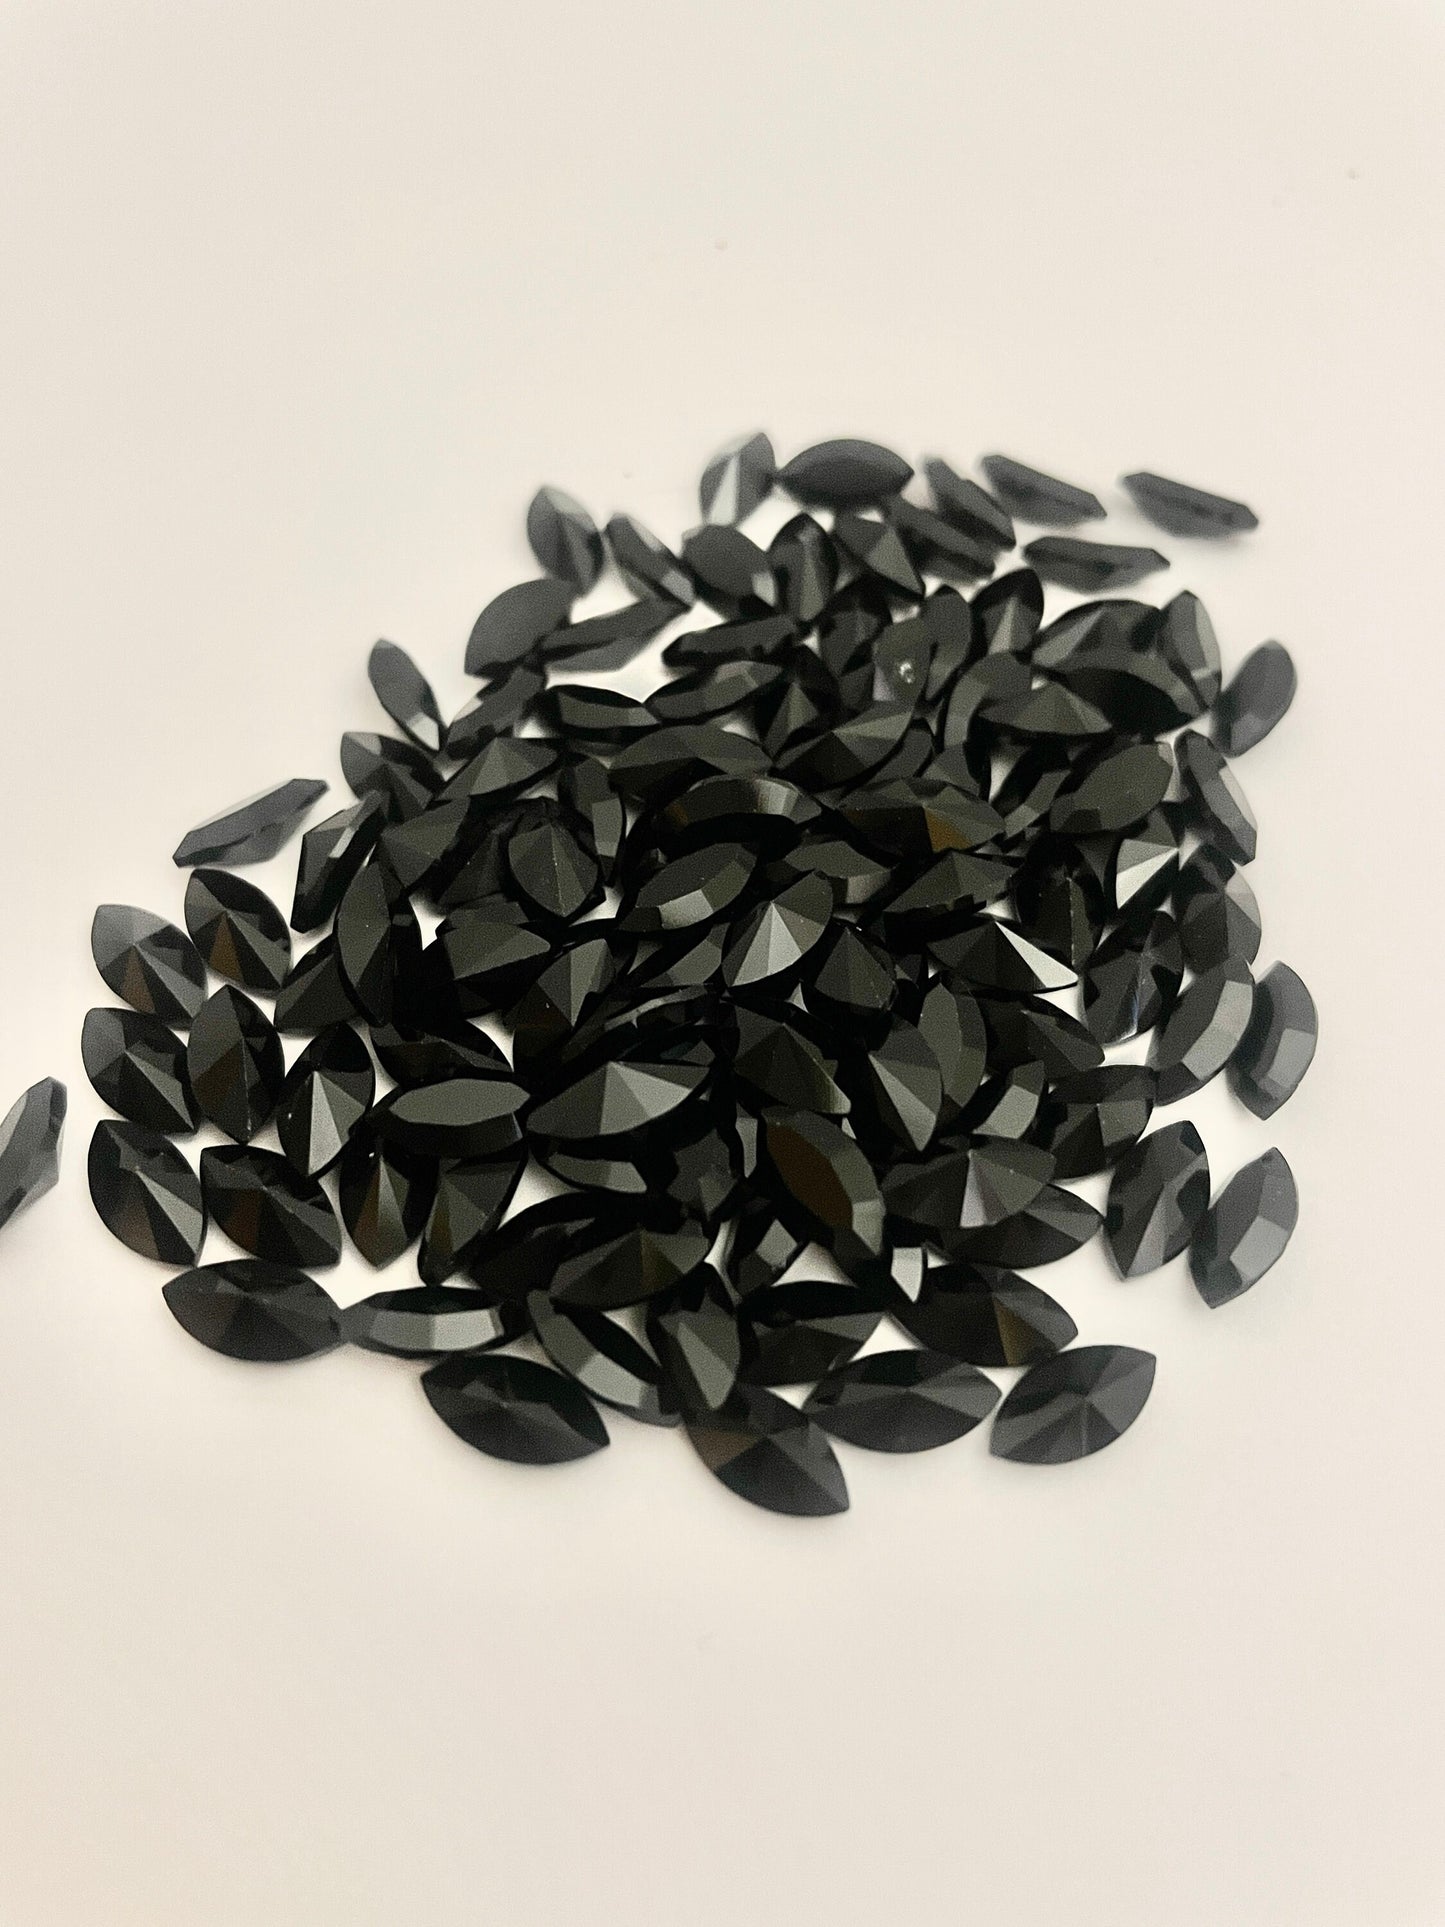 50 pieces of Jet Black Swarovski Crystal Navette Fancy Stone 10x5mm